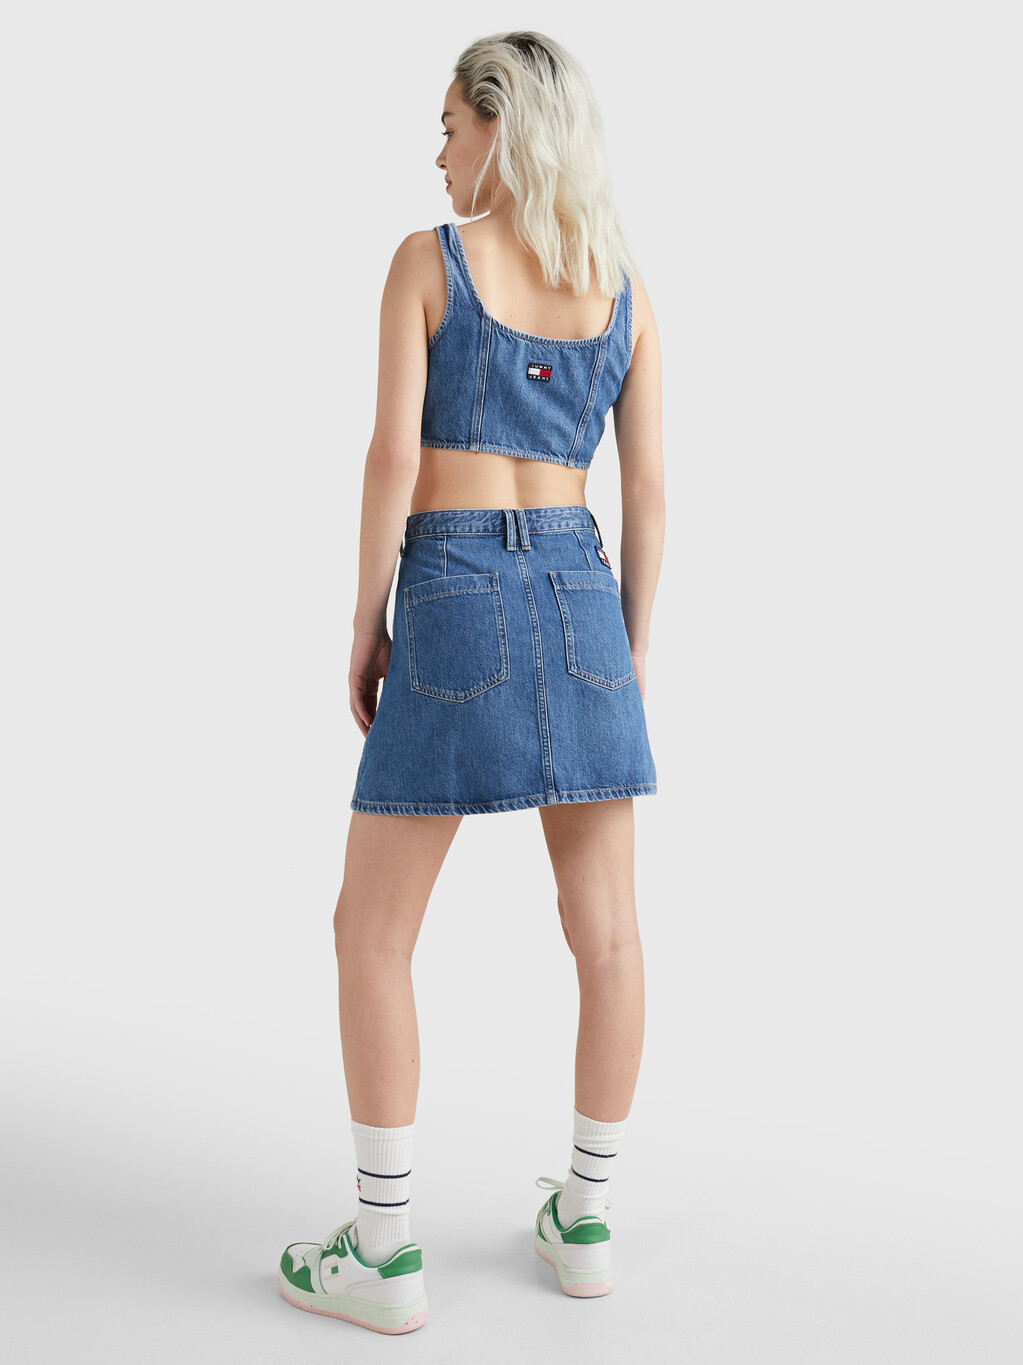 A-Line Denim Mini Skirt, Denim Medium, hi-res